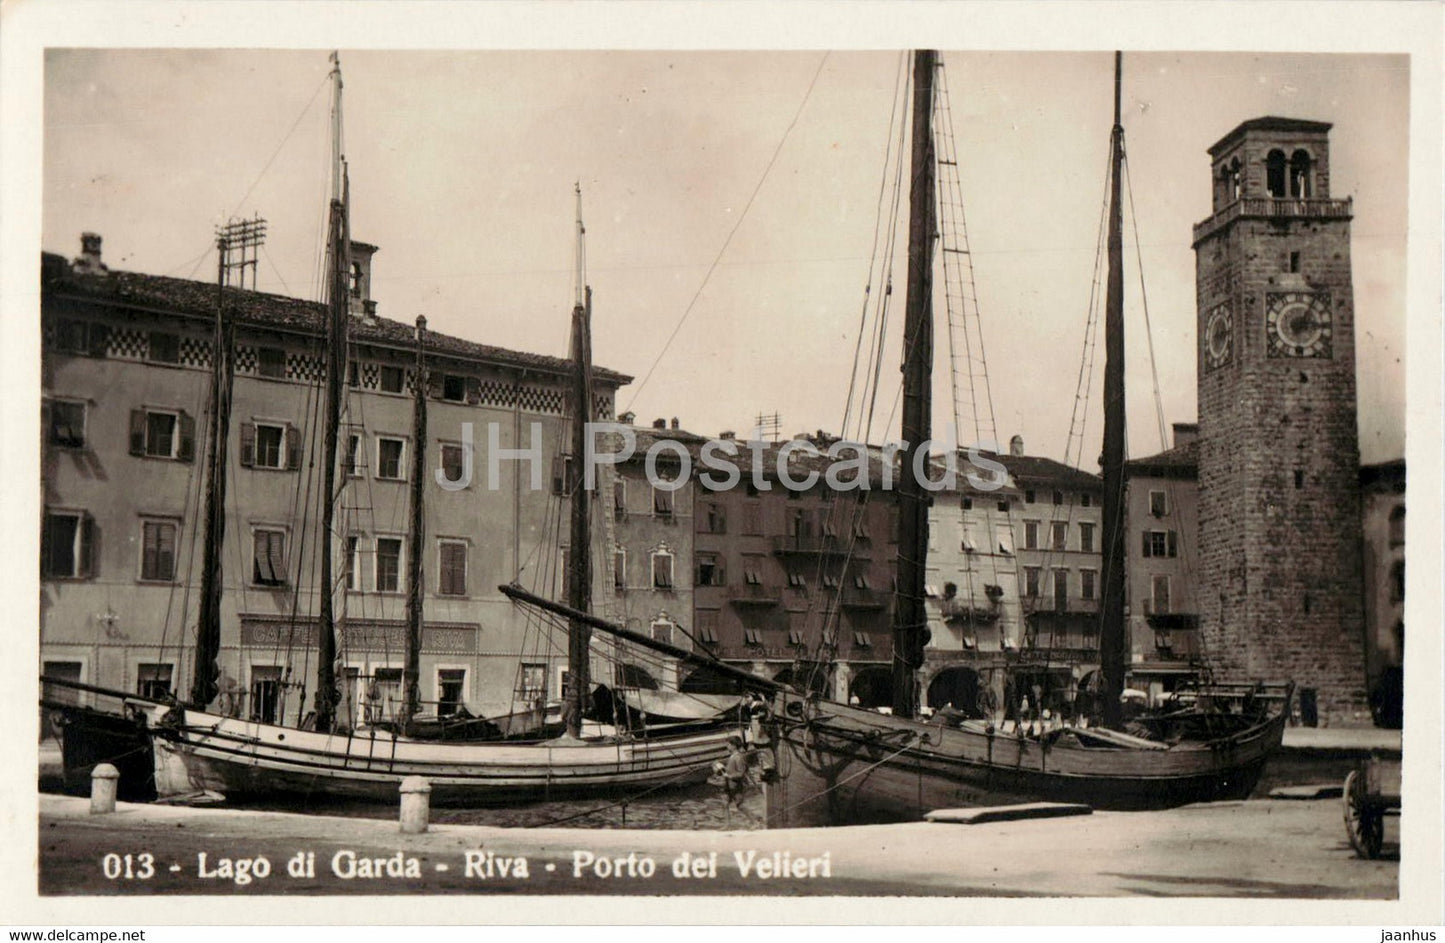 Lago di Garda - Riva - Porto dei Velieri - ship - 013 - old postcard - Italy - unused - JH Postcards